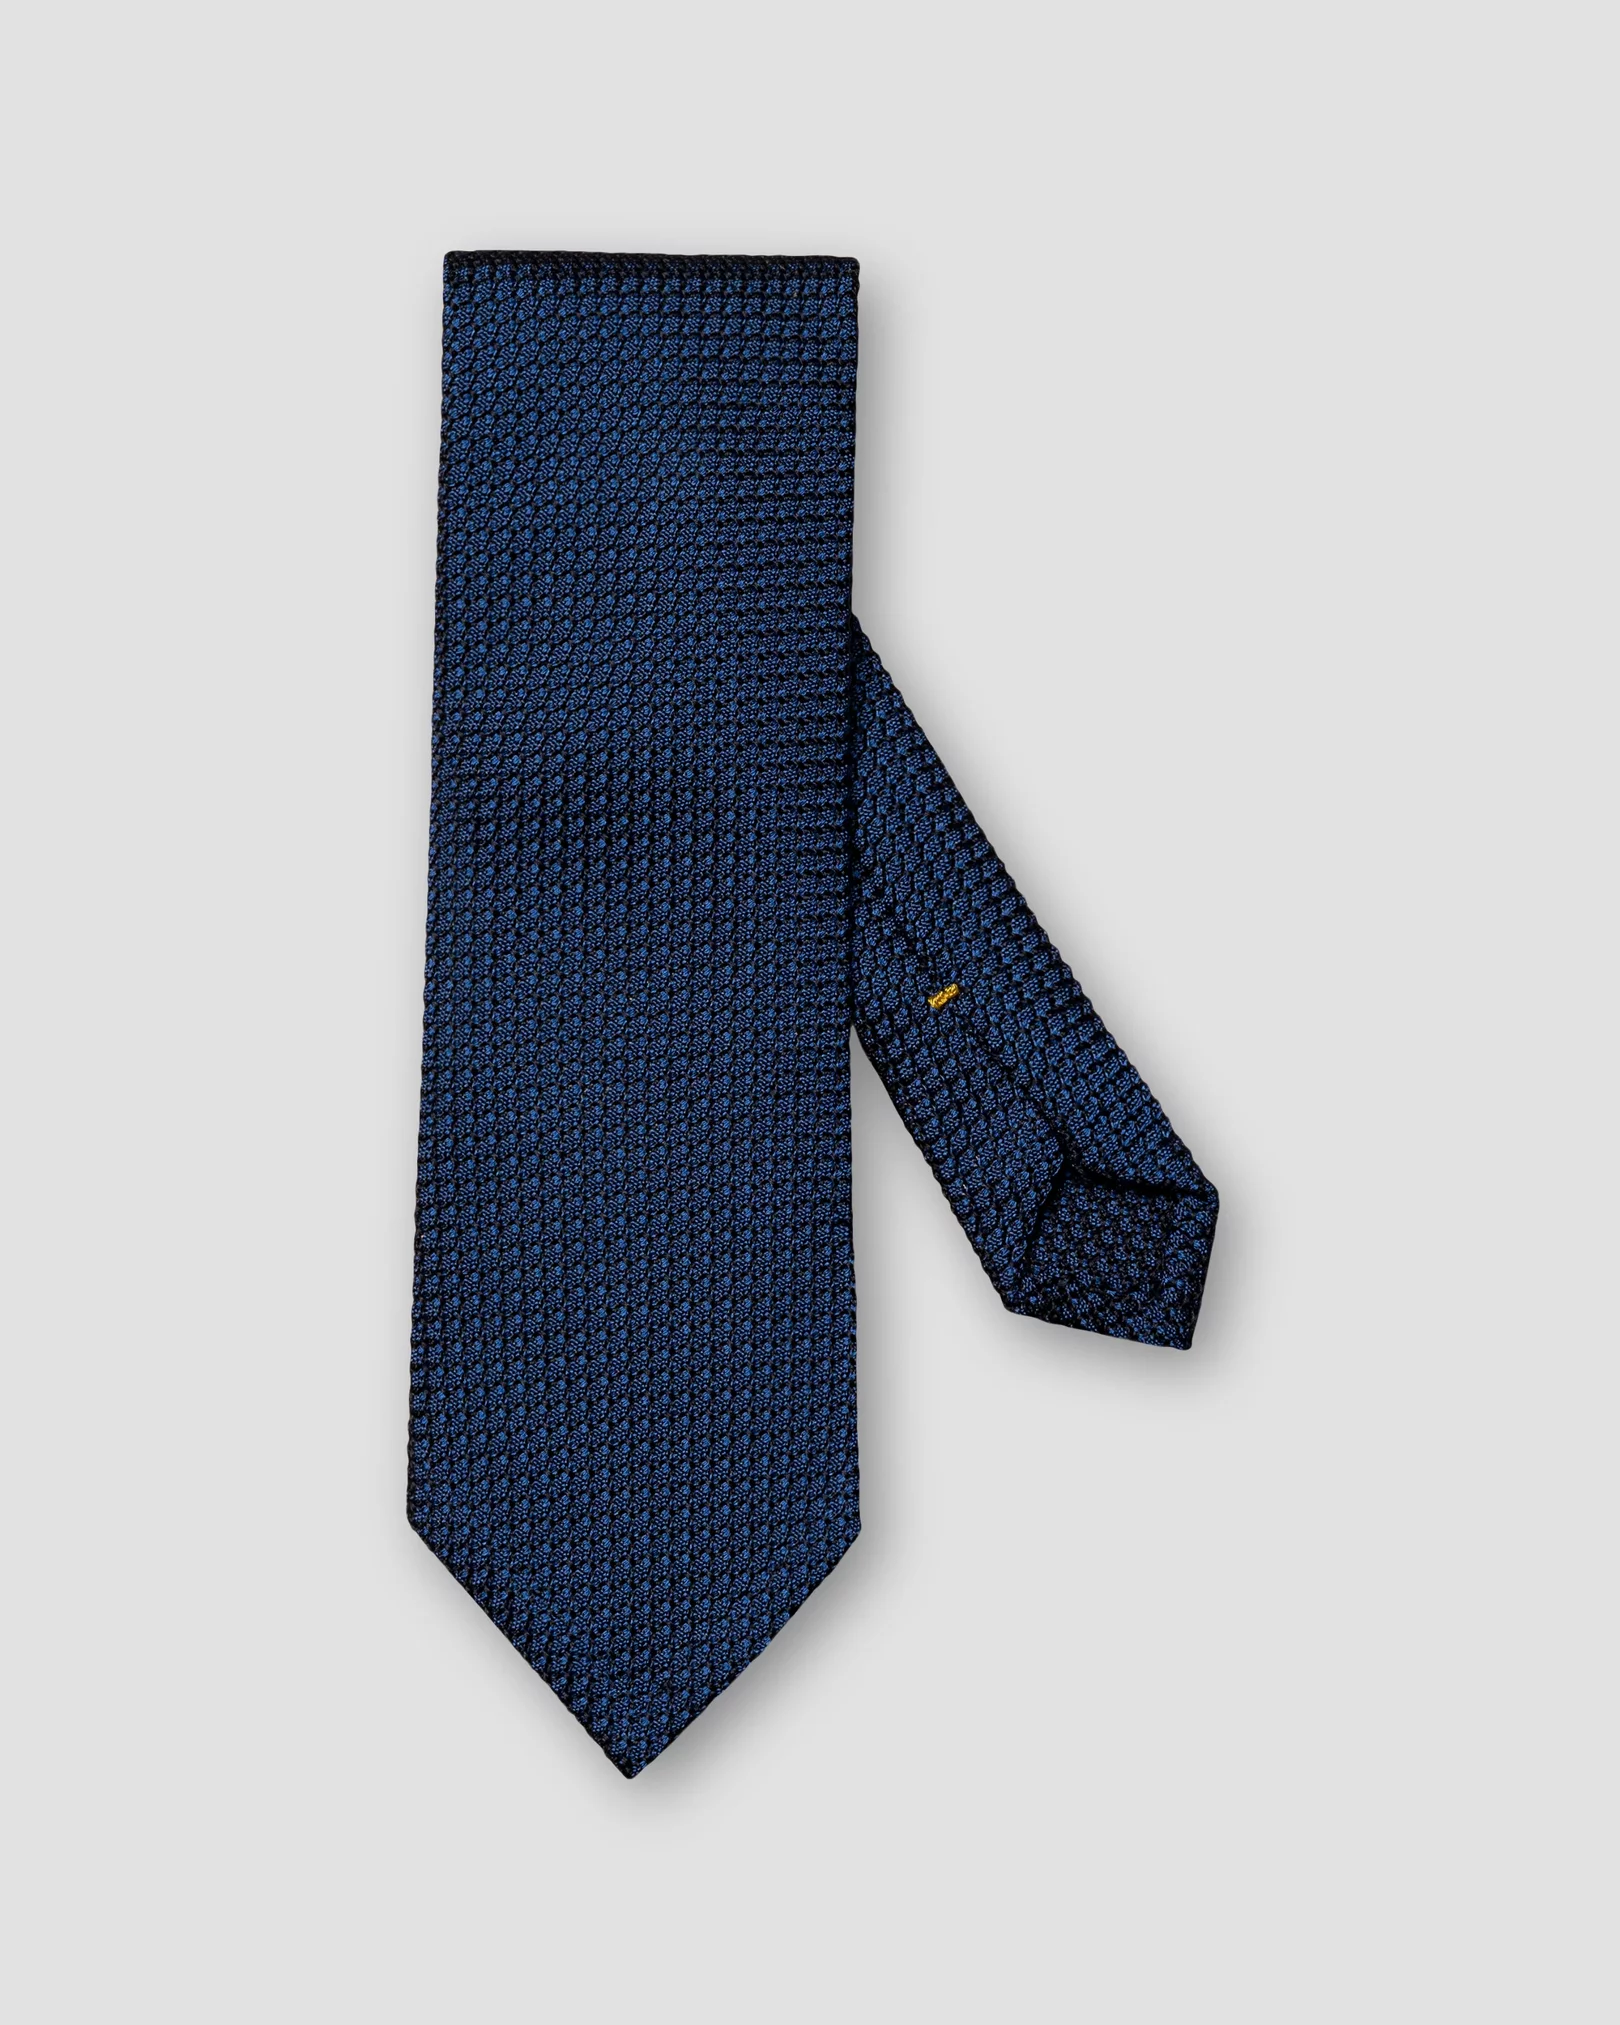 Cravate bleu marine en soie grenadine